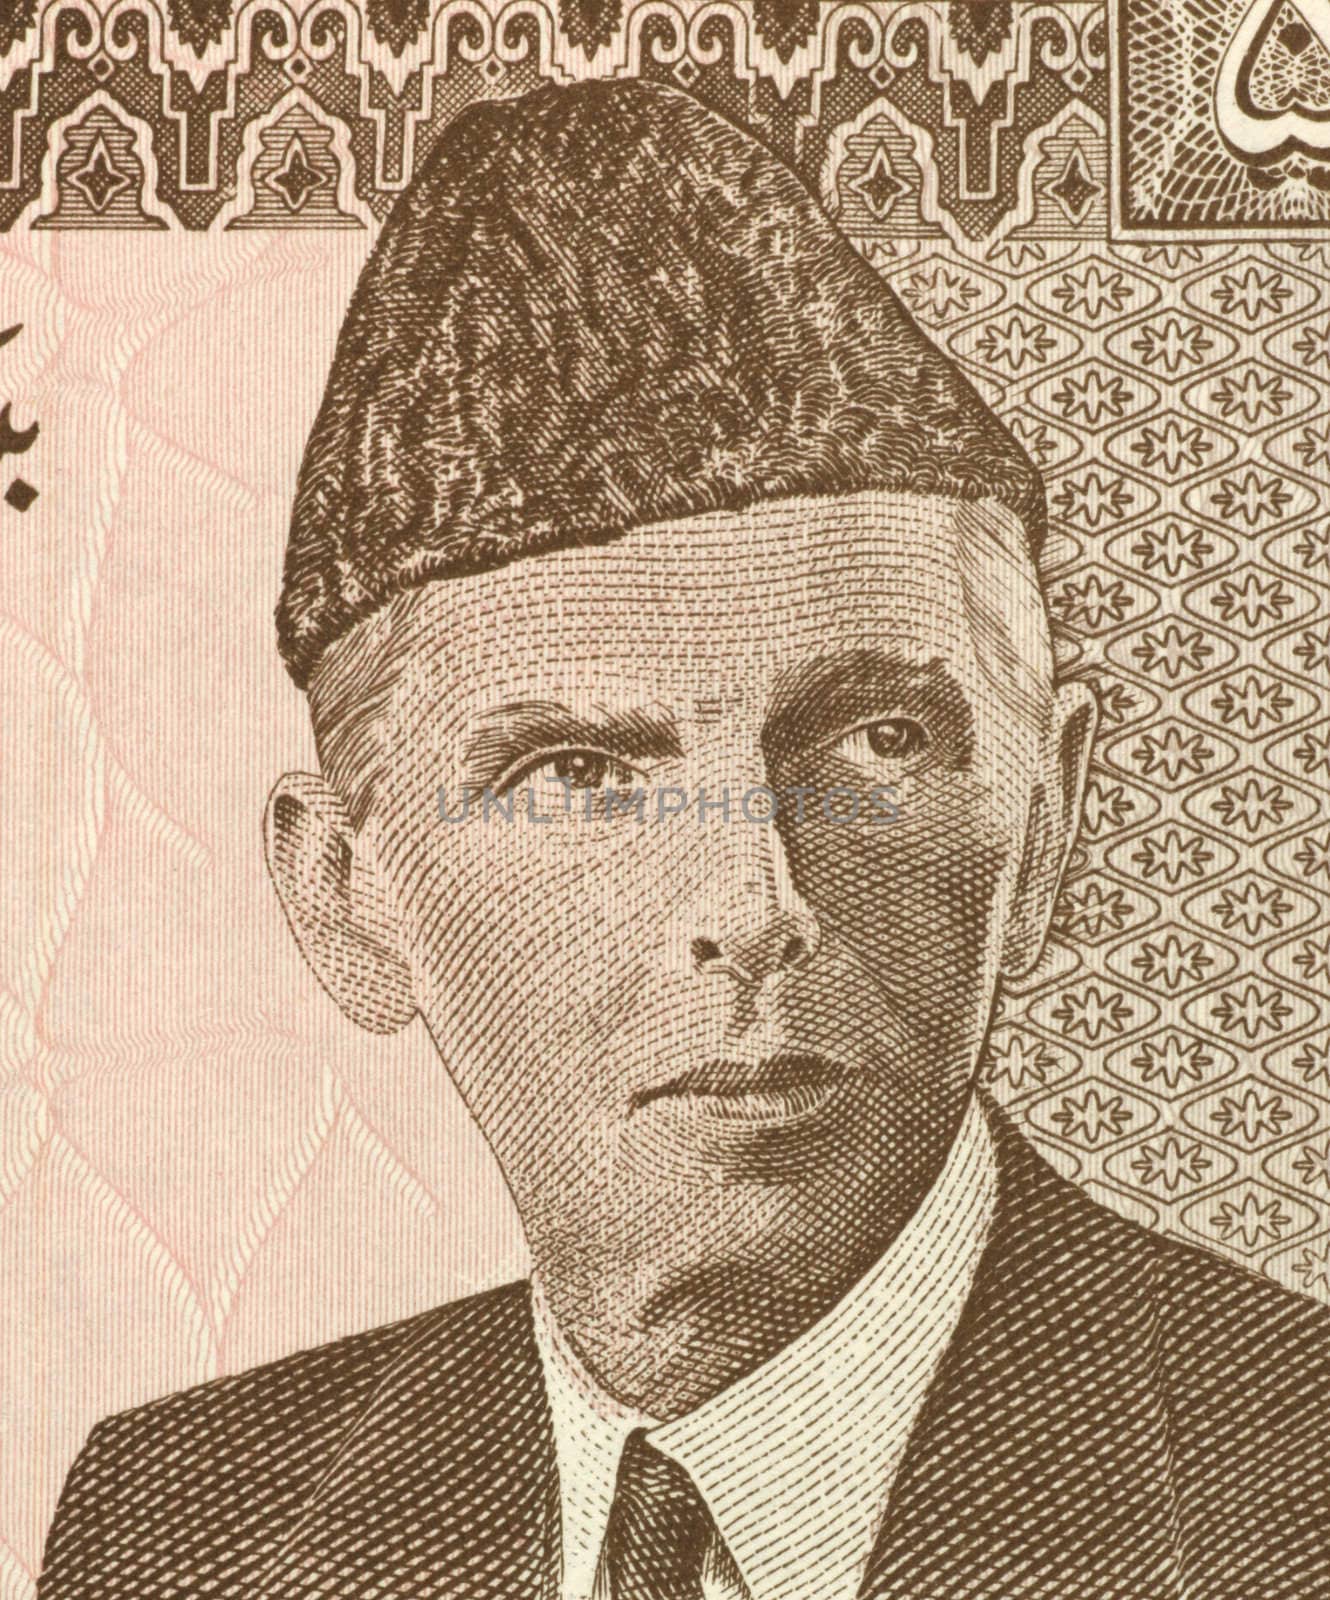 Mohammed Ali Jinnah by Georgios